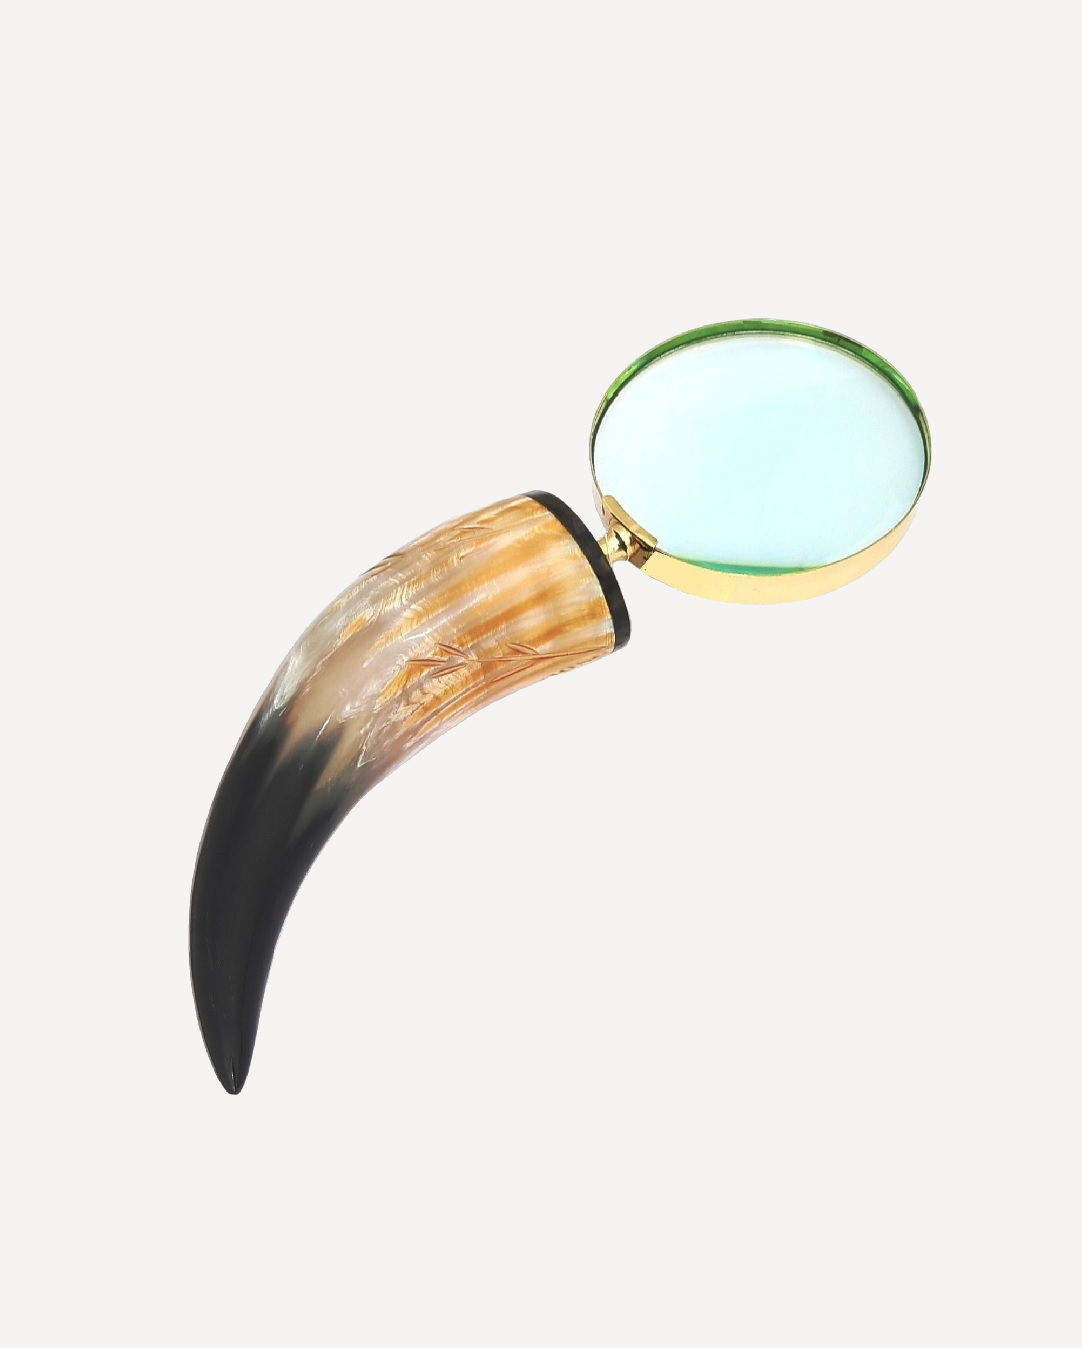 Horn handle magnifier